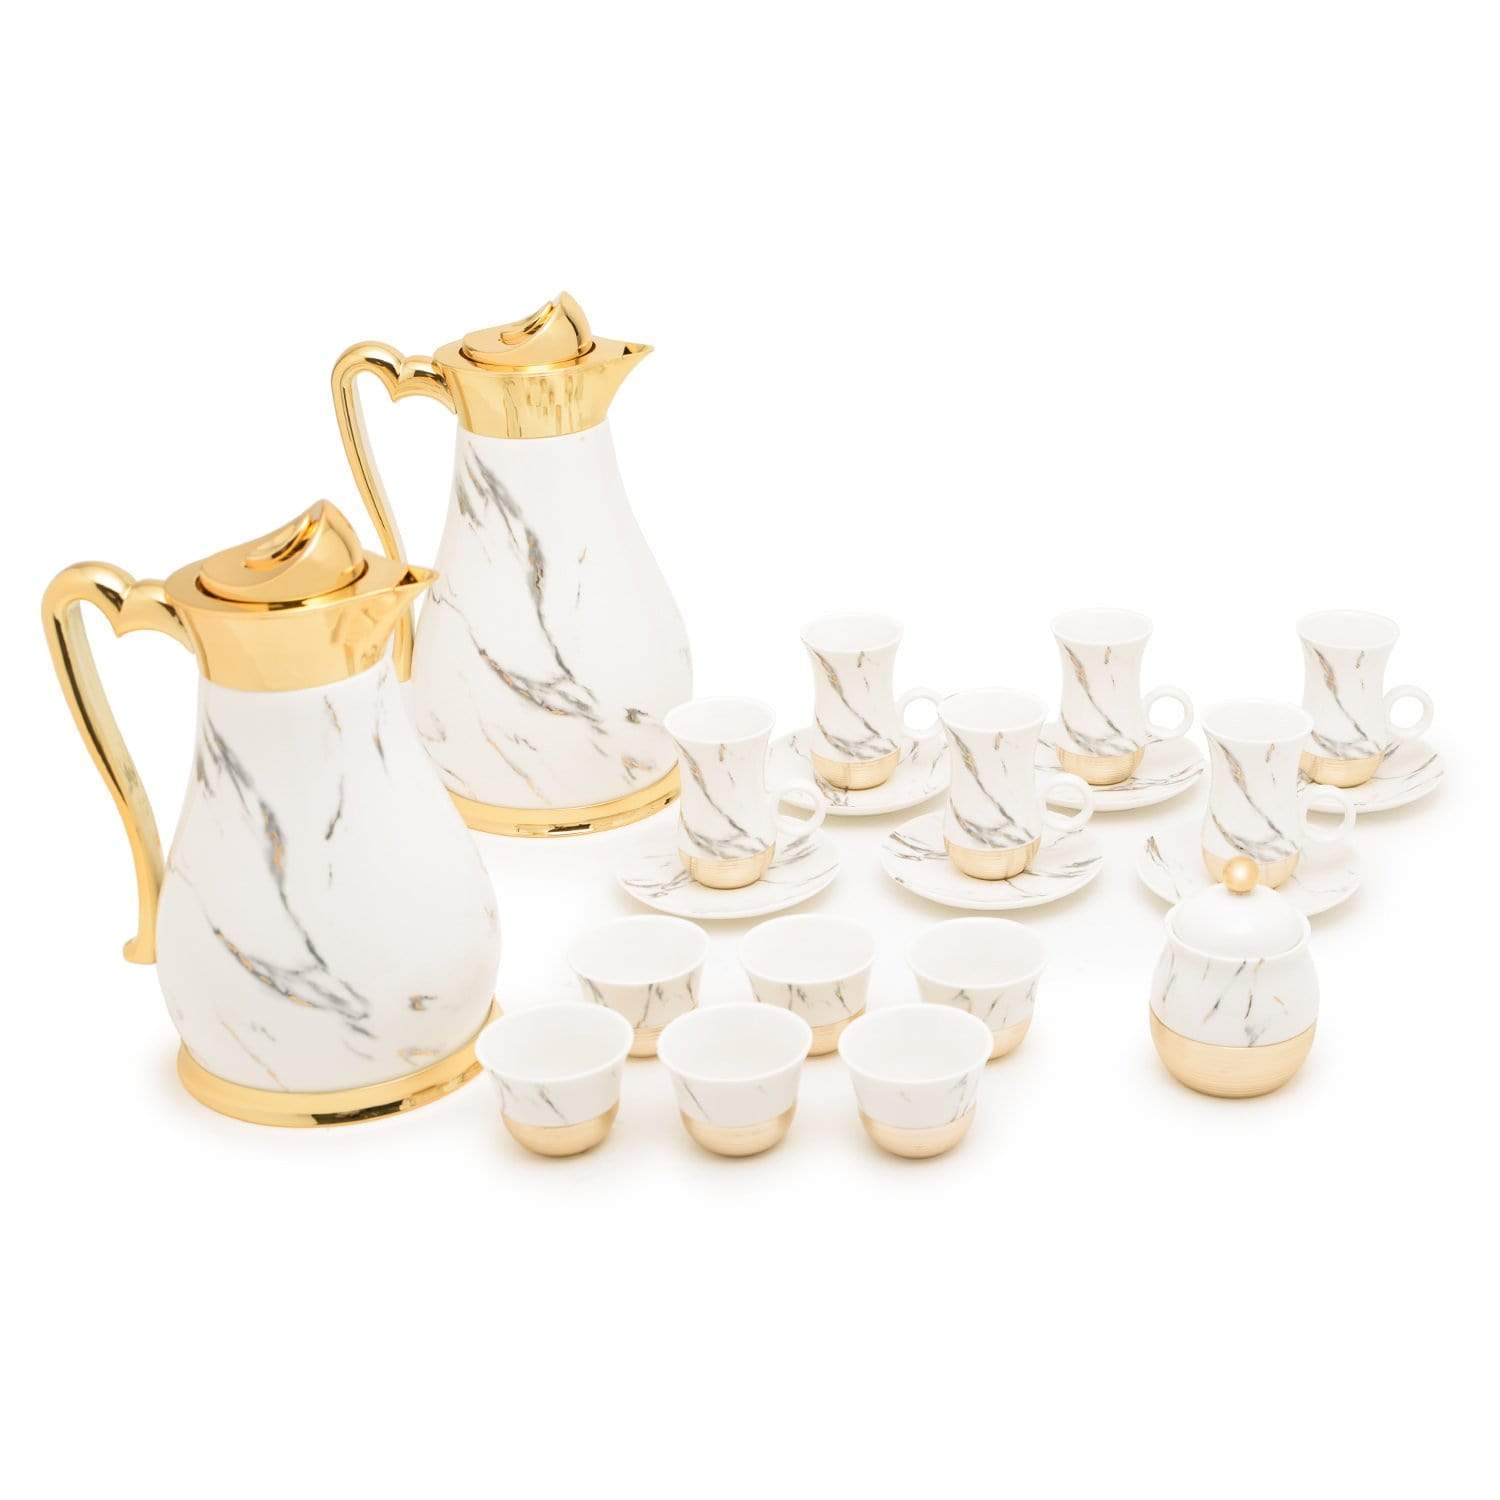 ام ديلوين طقم شاي ذهبي مع قارورة مزينة - 22 قطعة - AM9415-S21/042 - Jashanmal Home